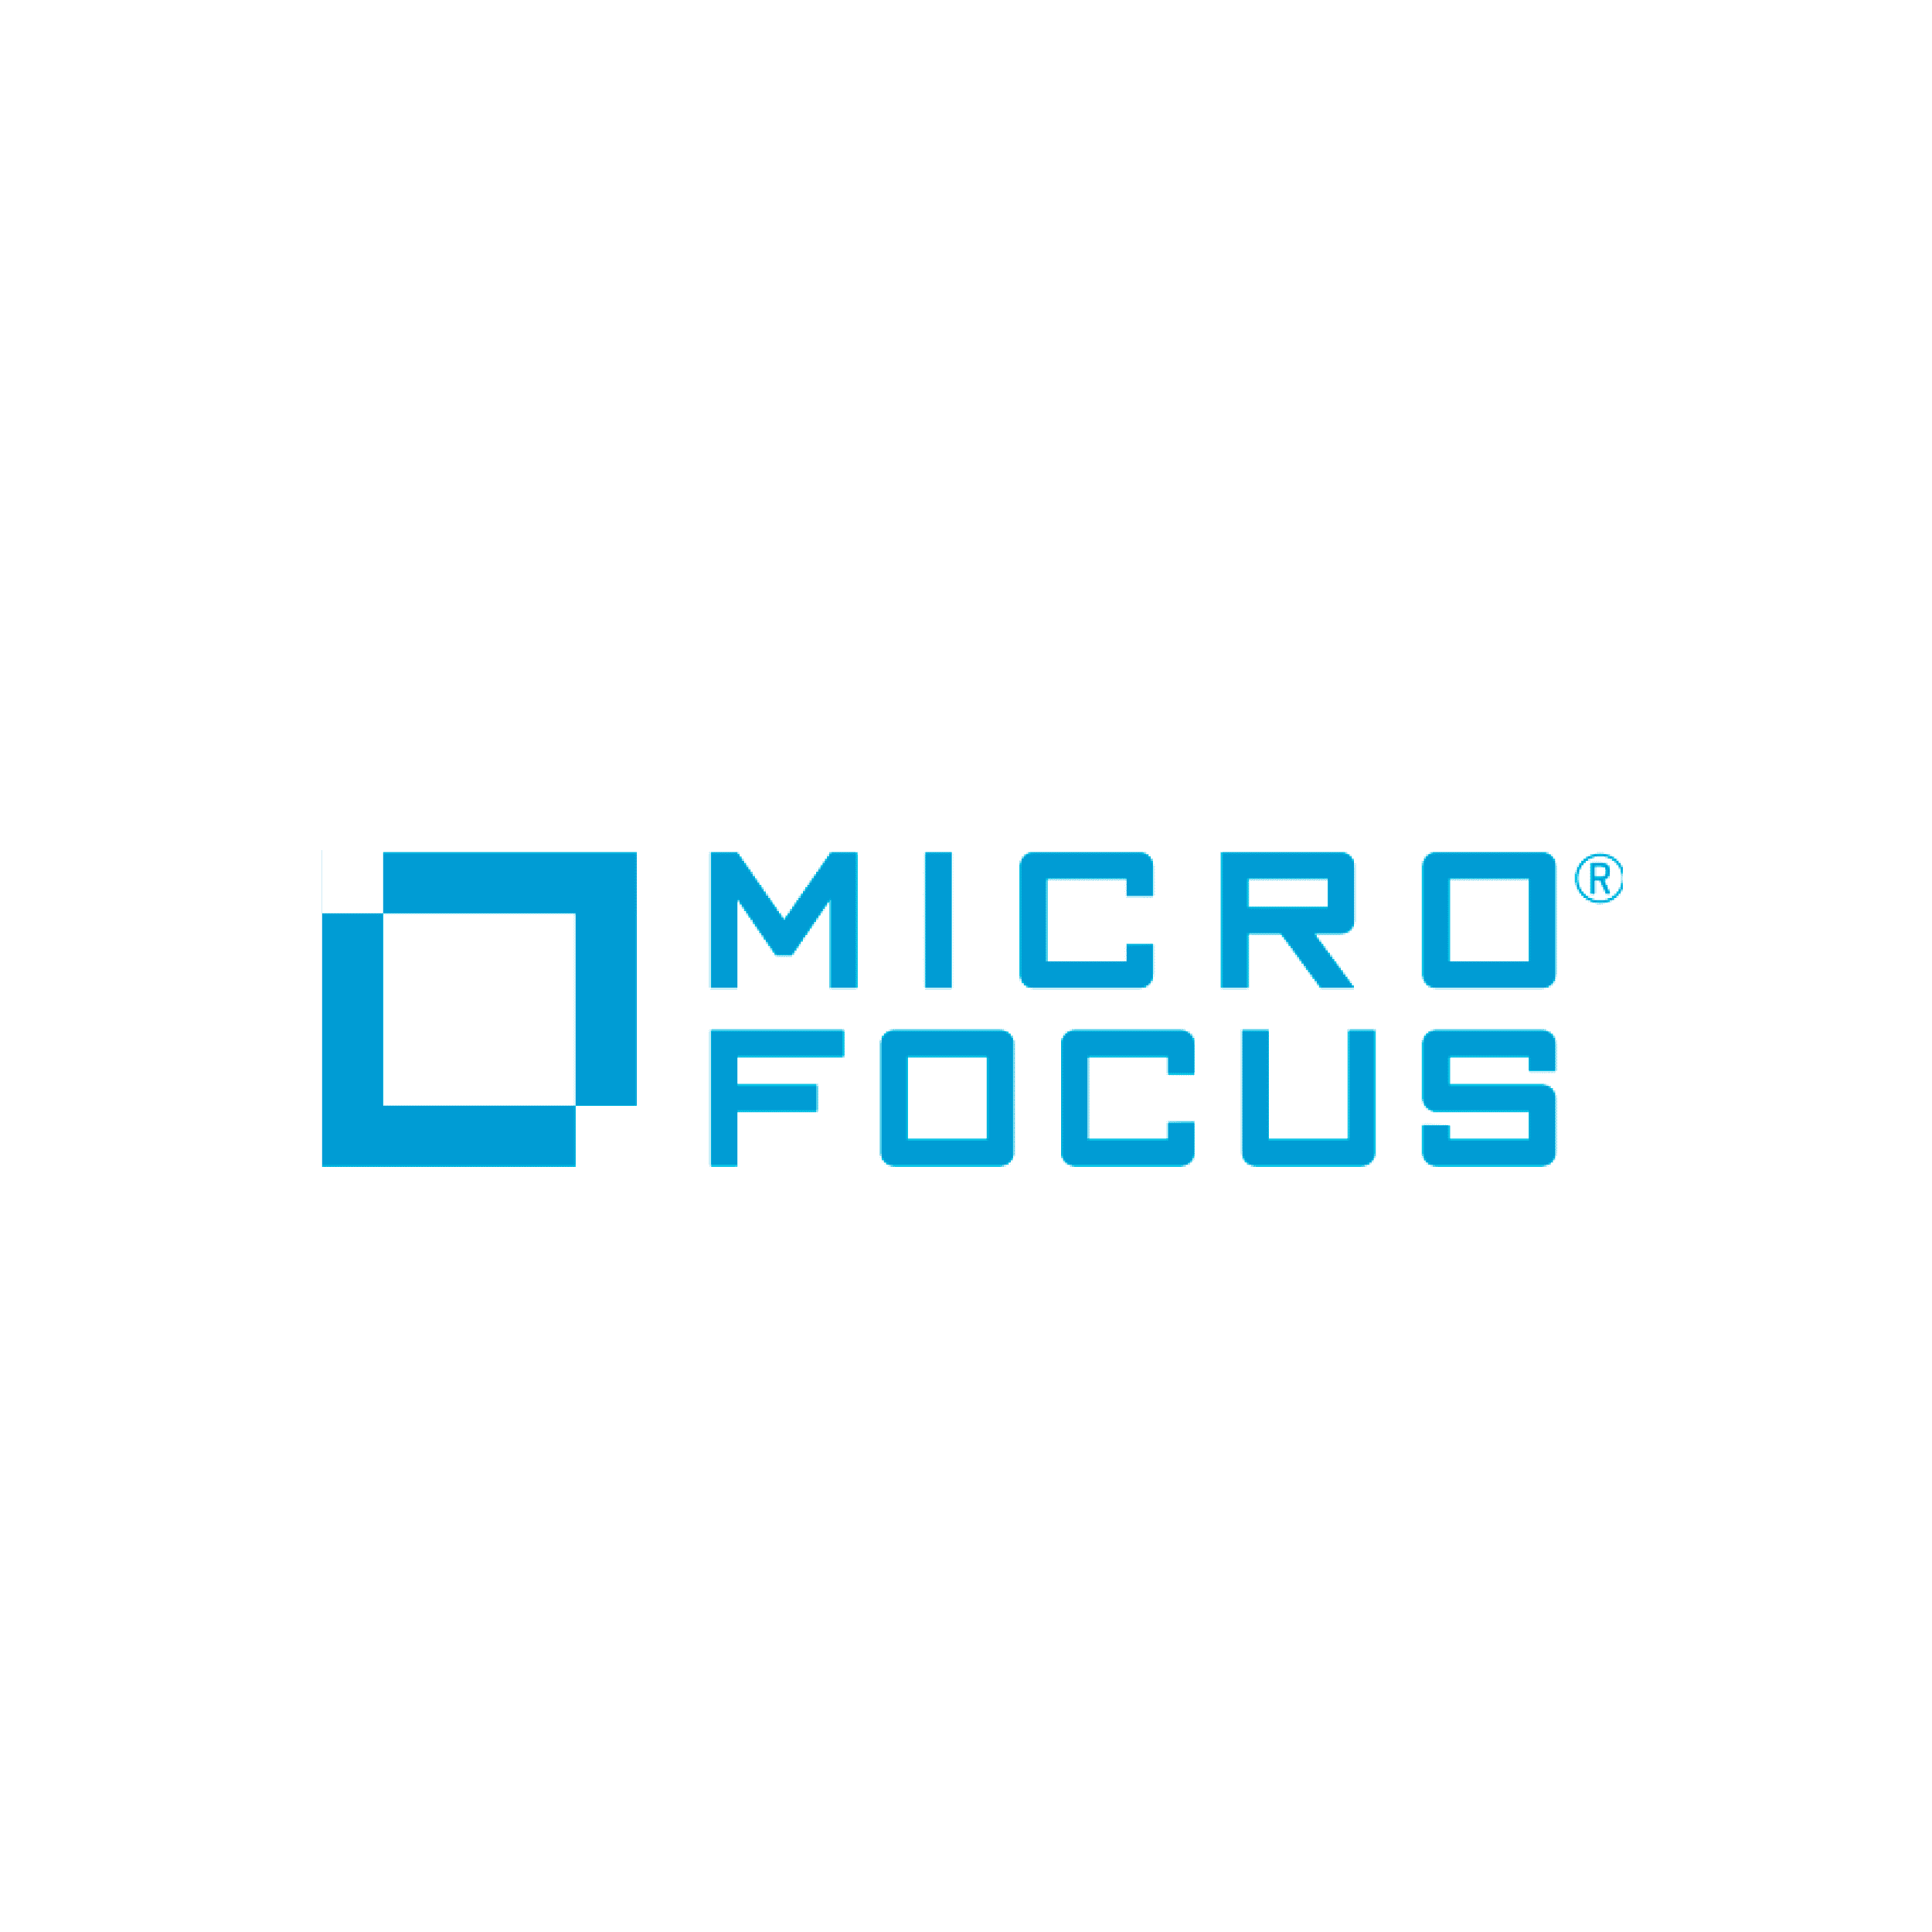 Micro Focus Novell